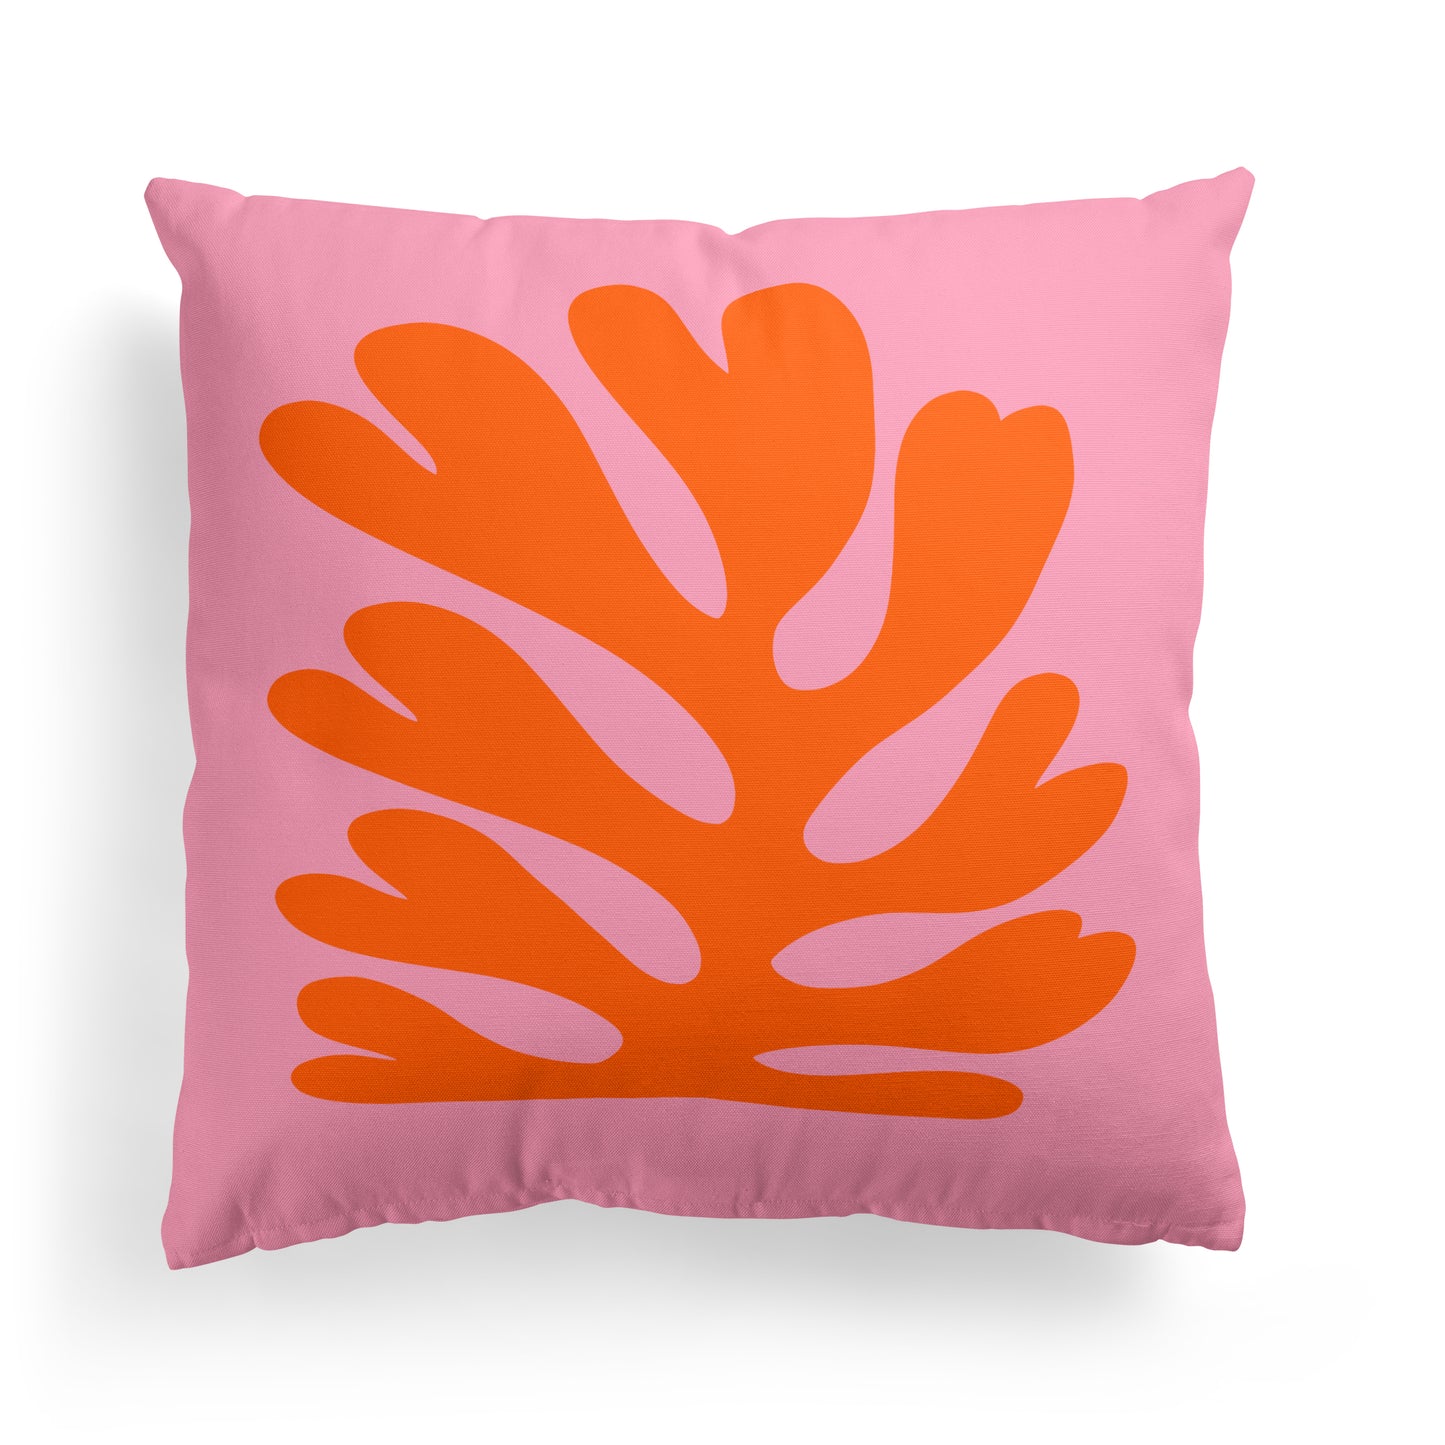 Eclectic Pink Throw Pillow